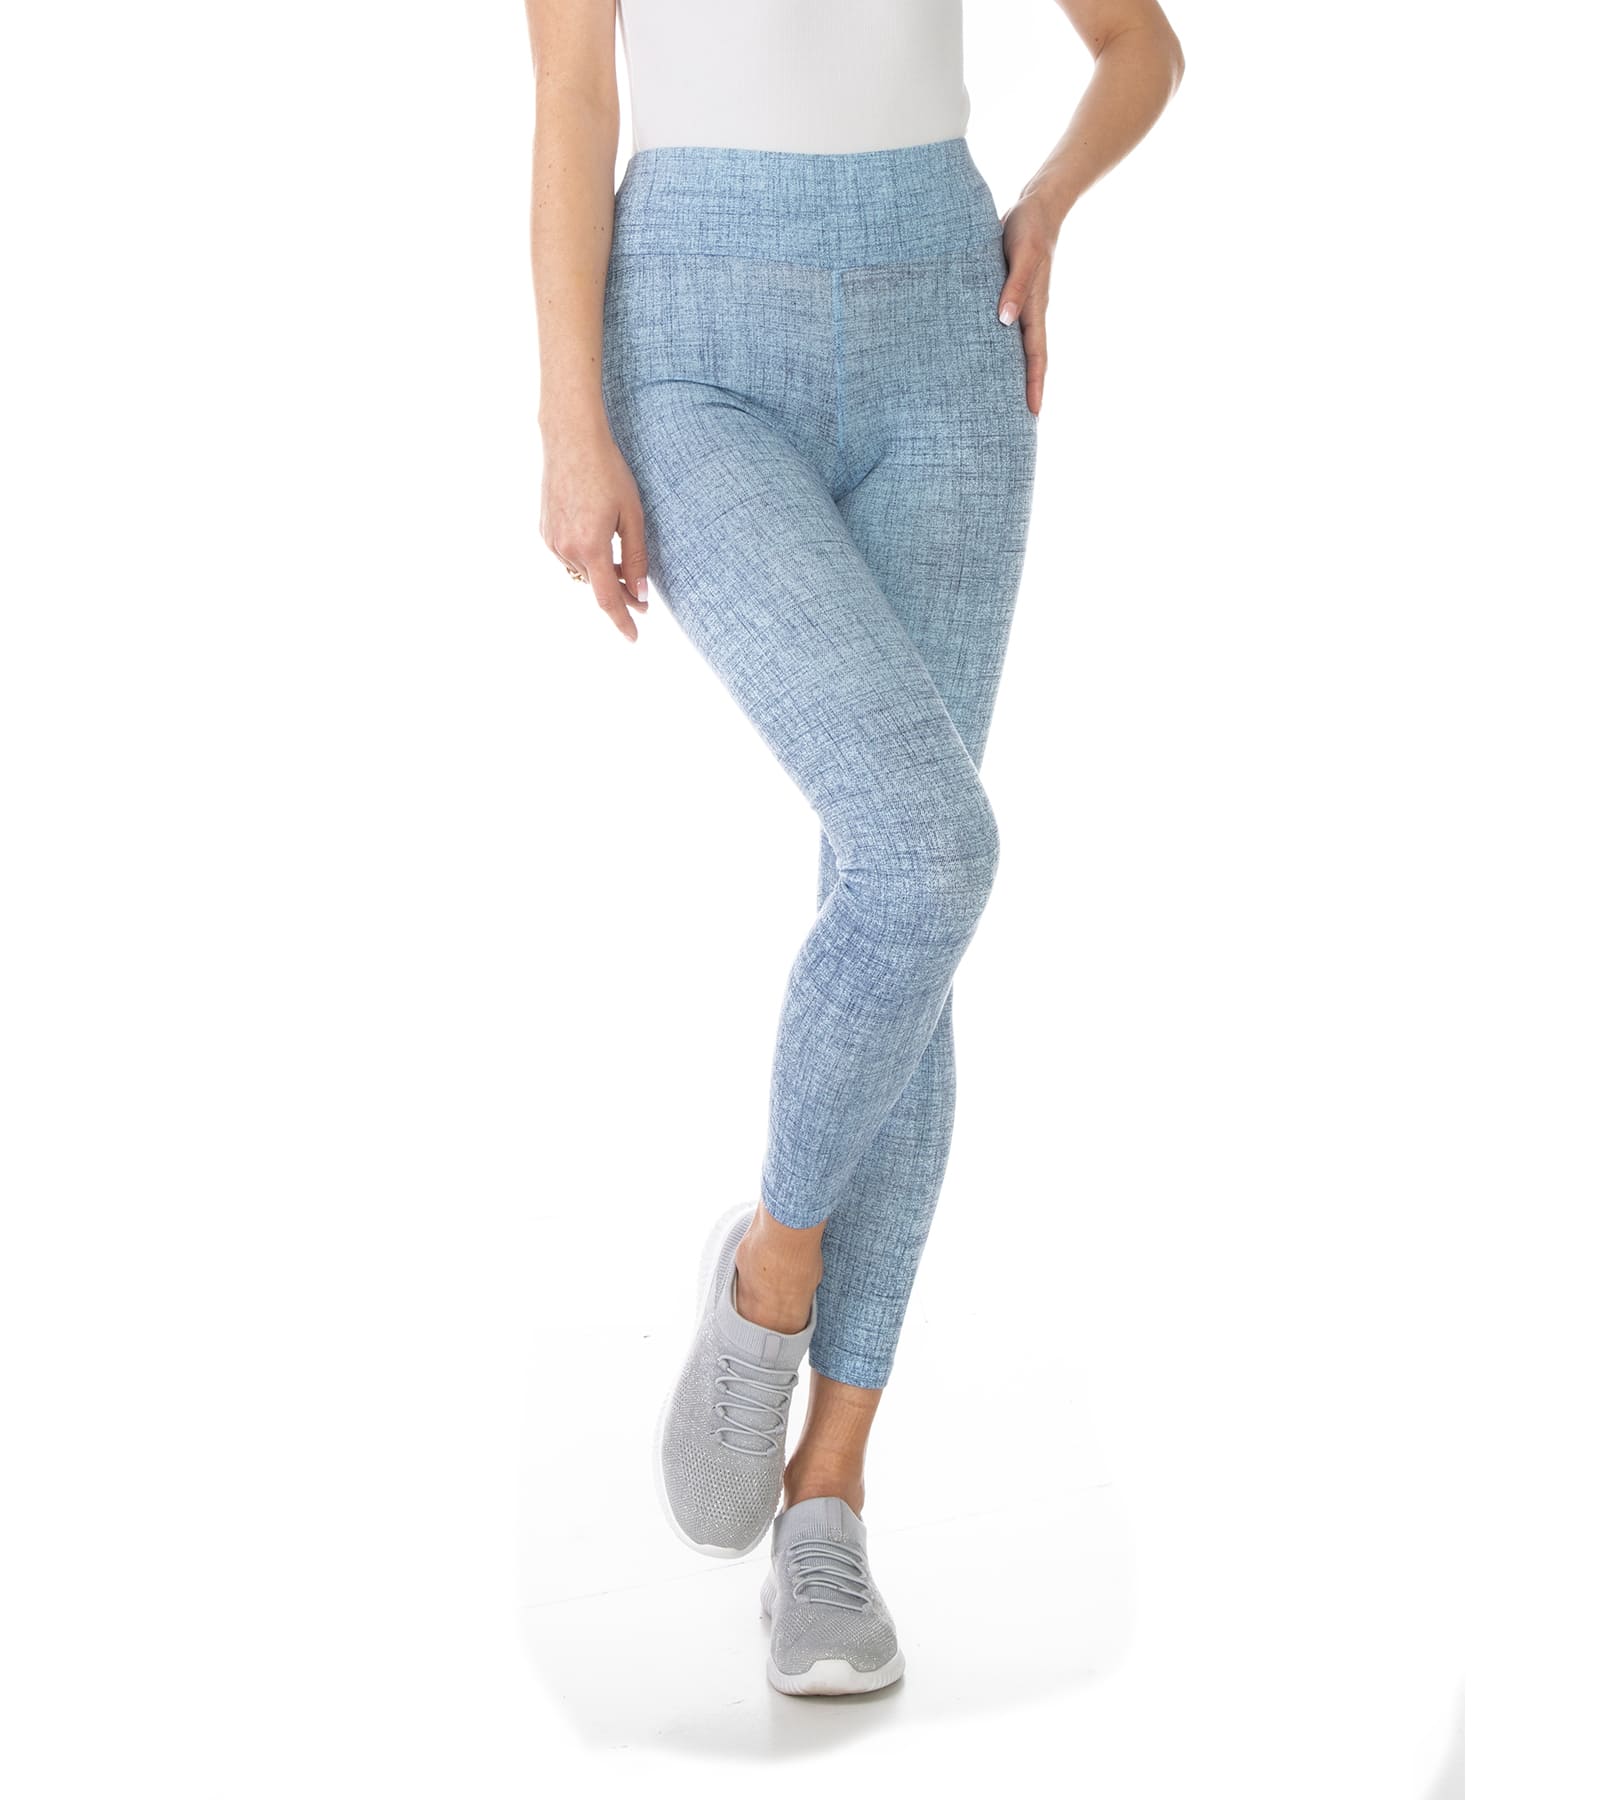 Legginsy damskie wzorzyste nadruk jasny jeans Amber